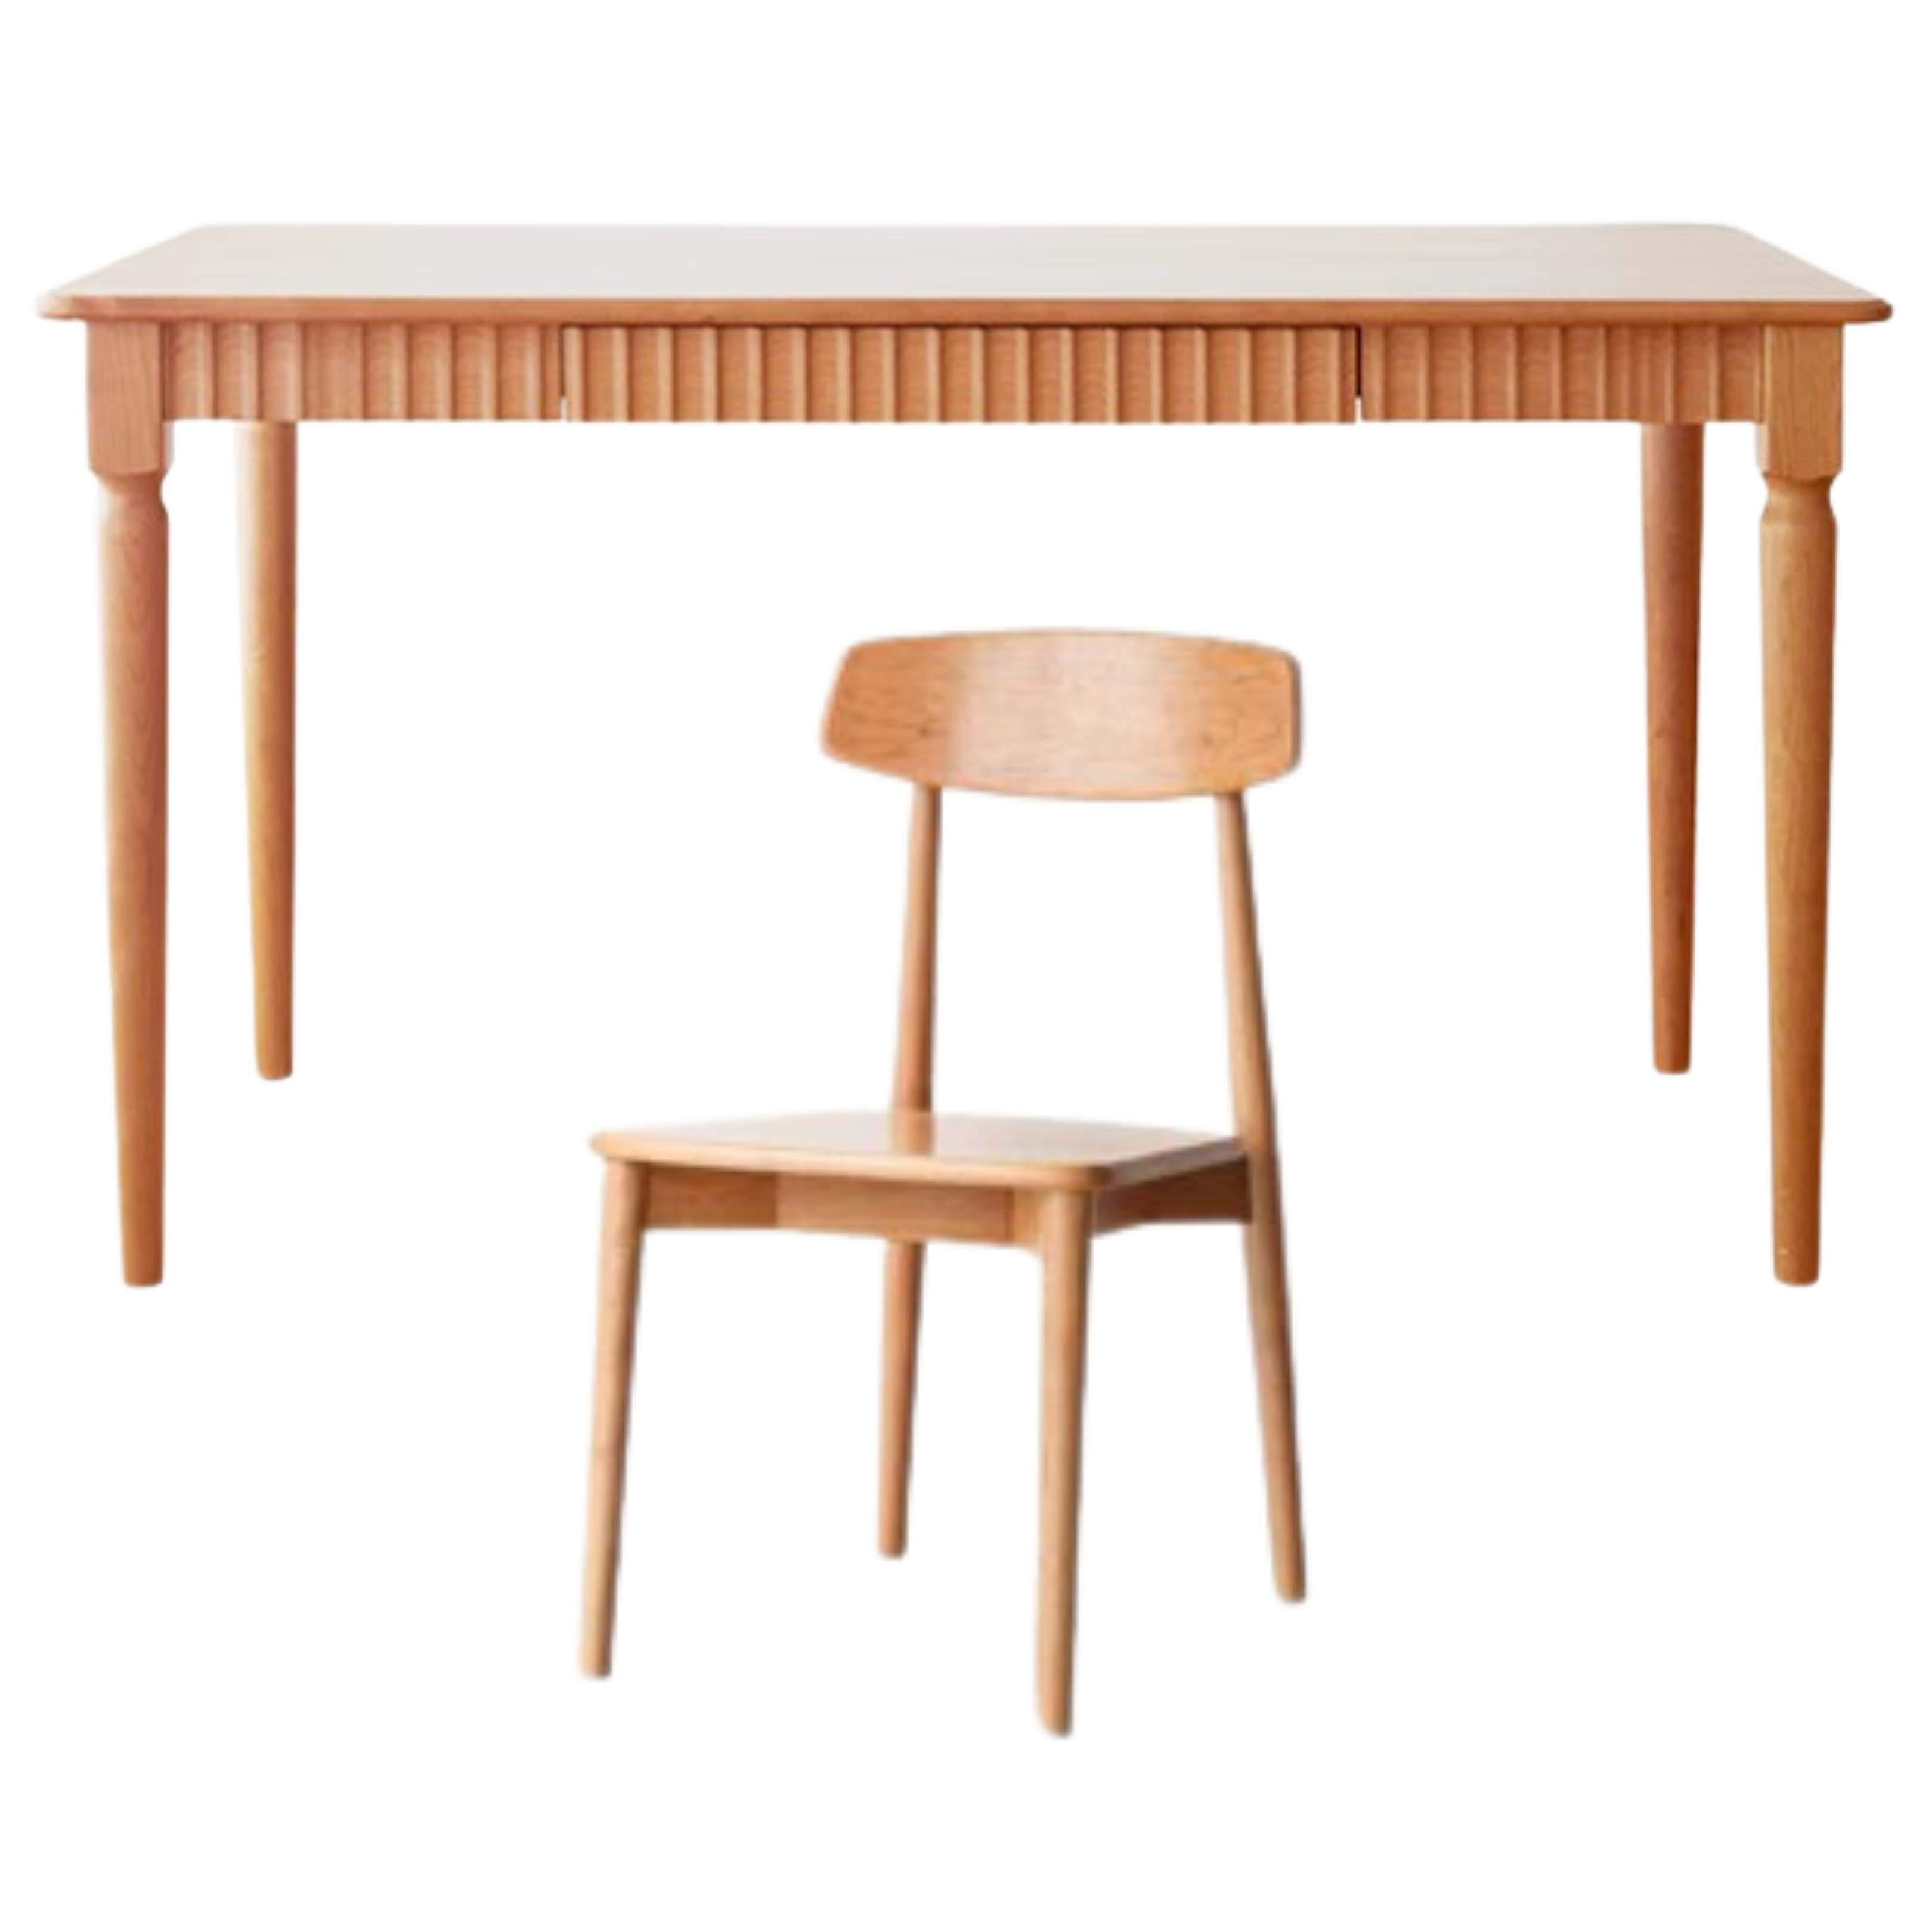 Cherry wood, light retro dining table